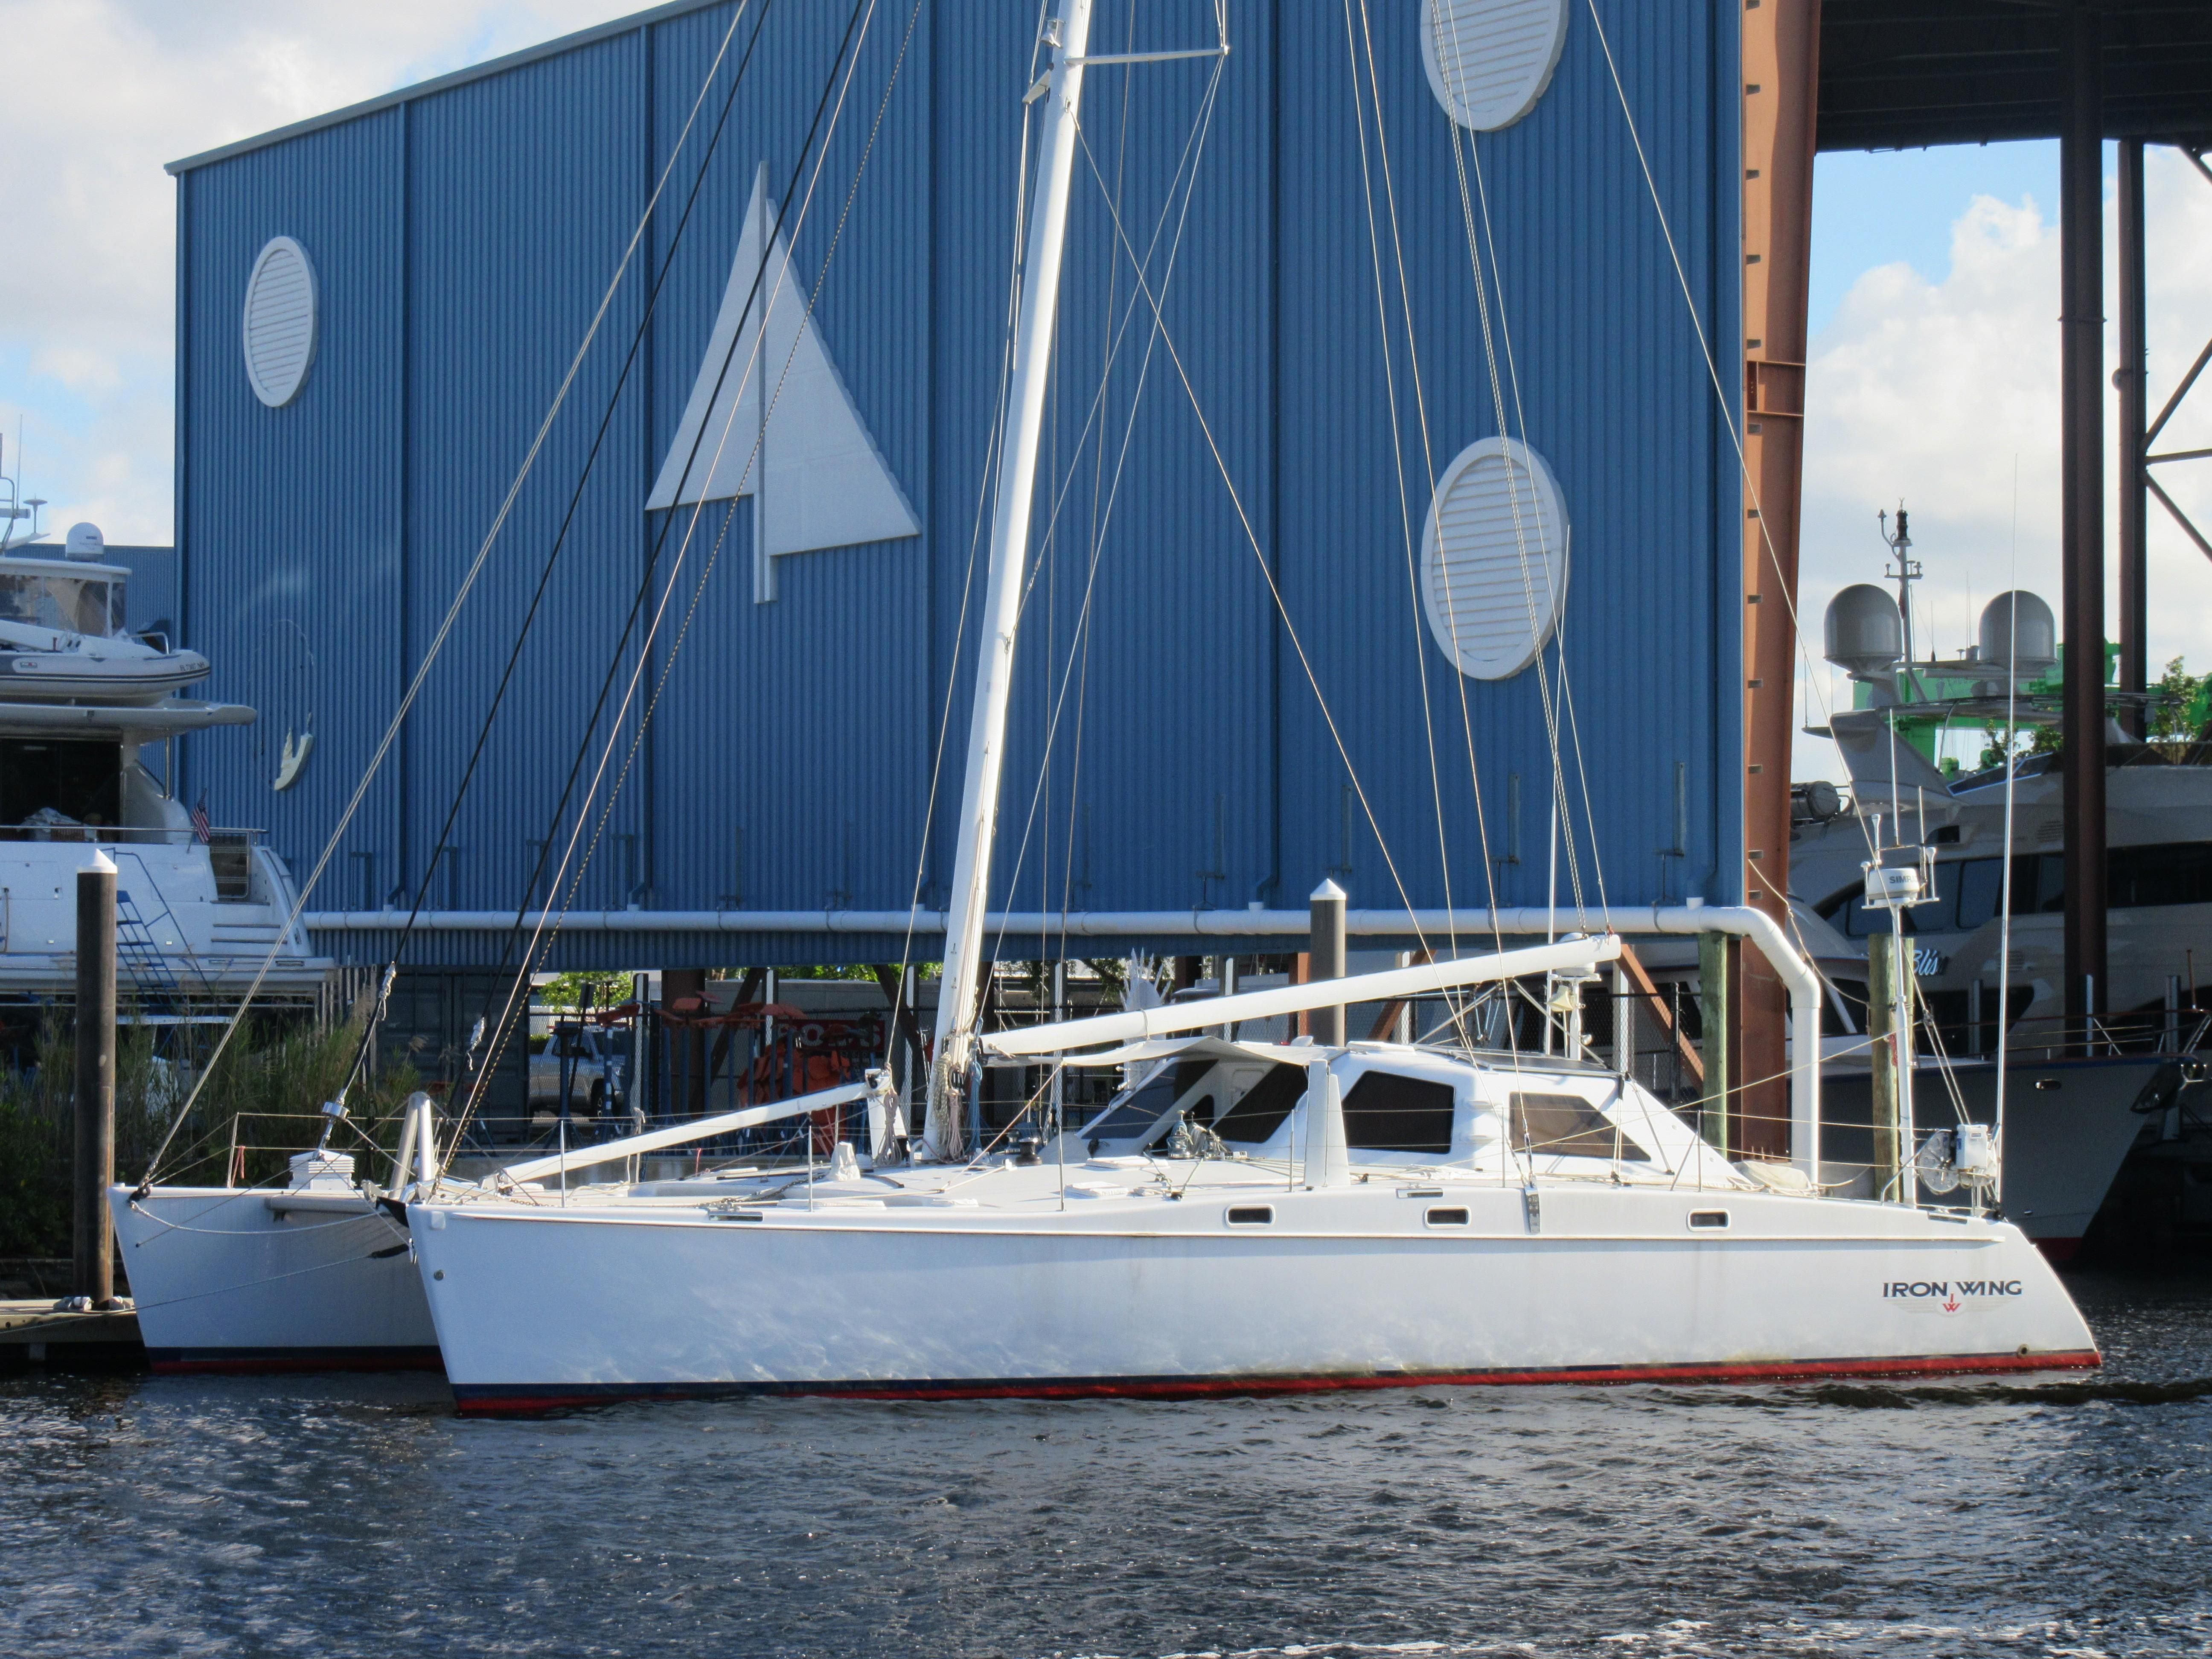 atlantic 55 yacht for sale